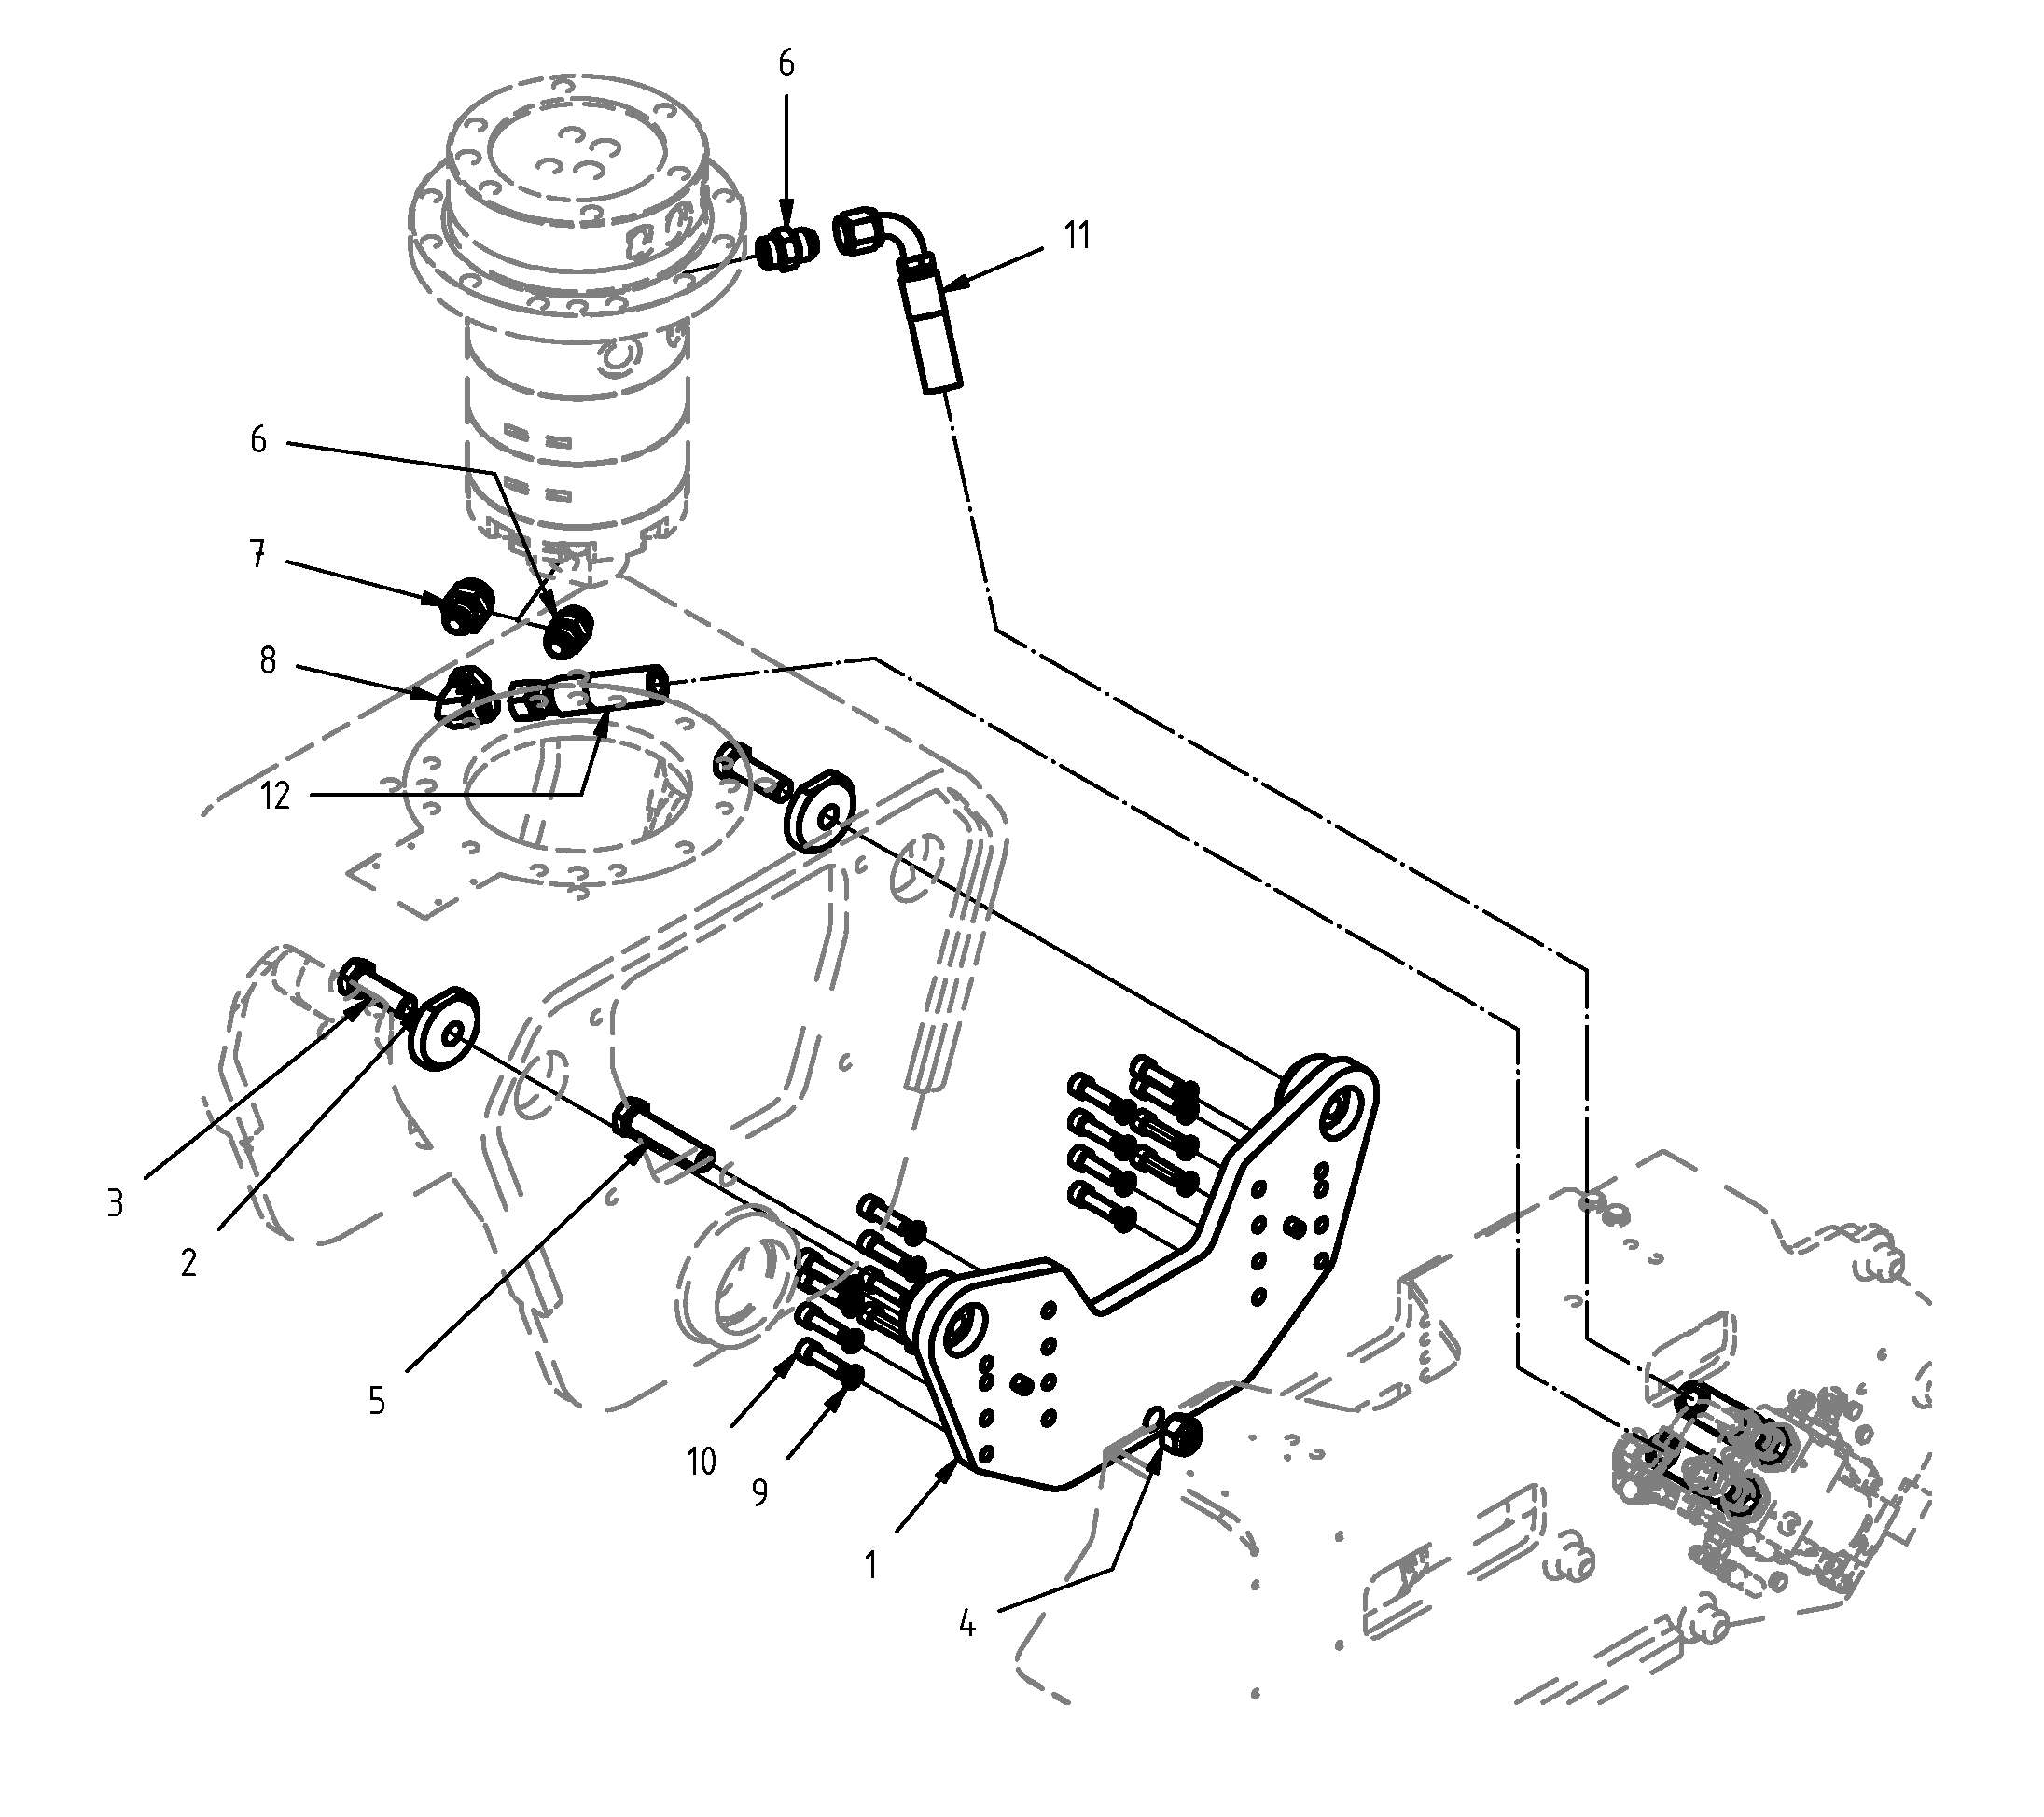 Kit de montage rotateur IR12